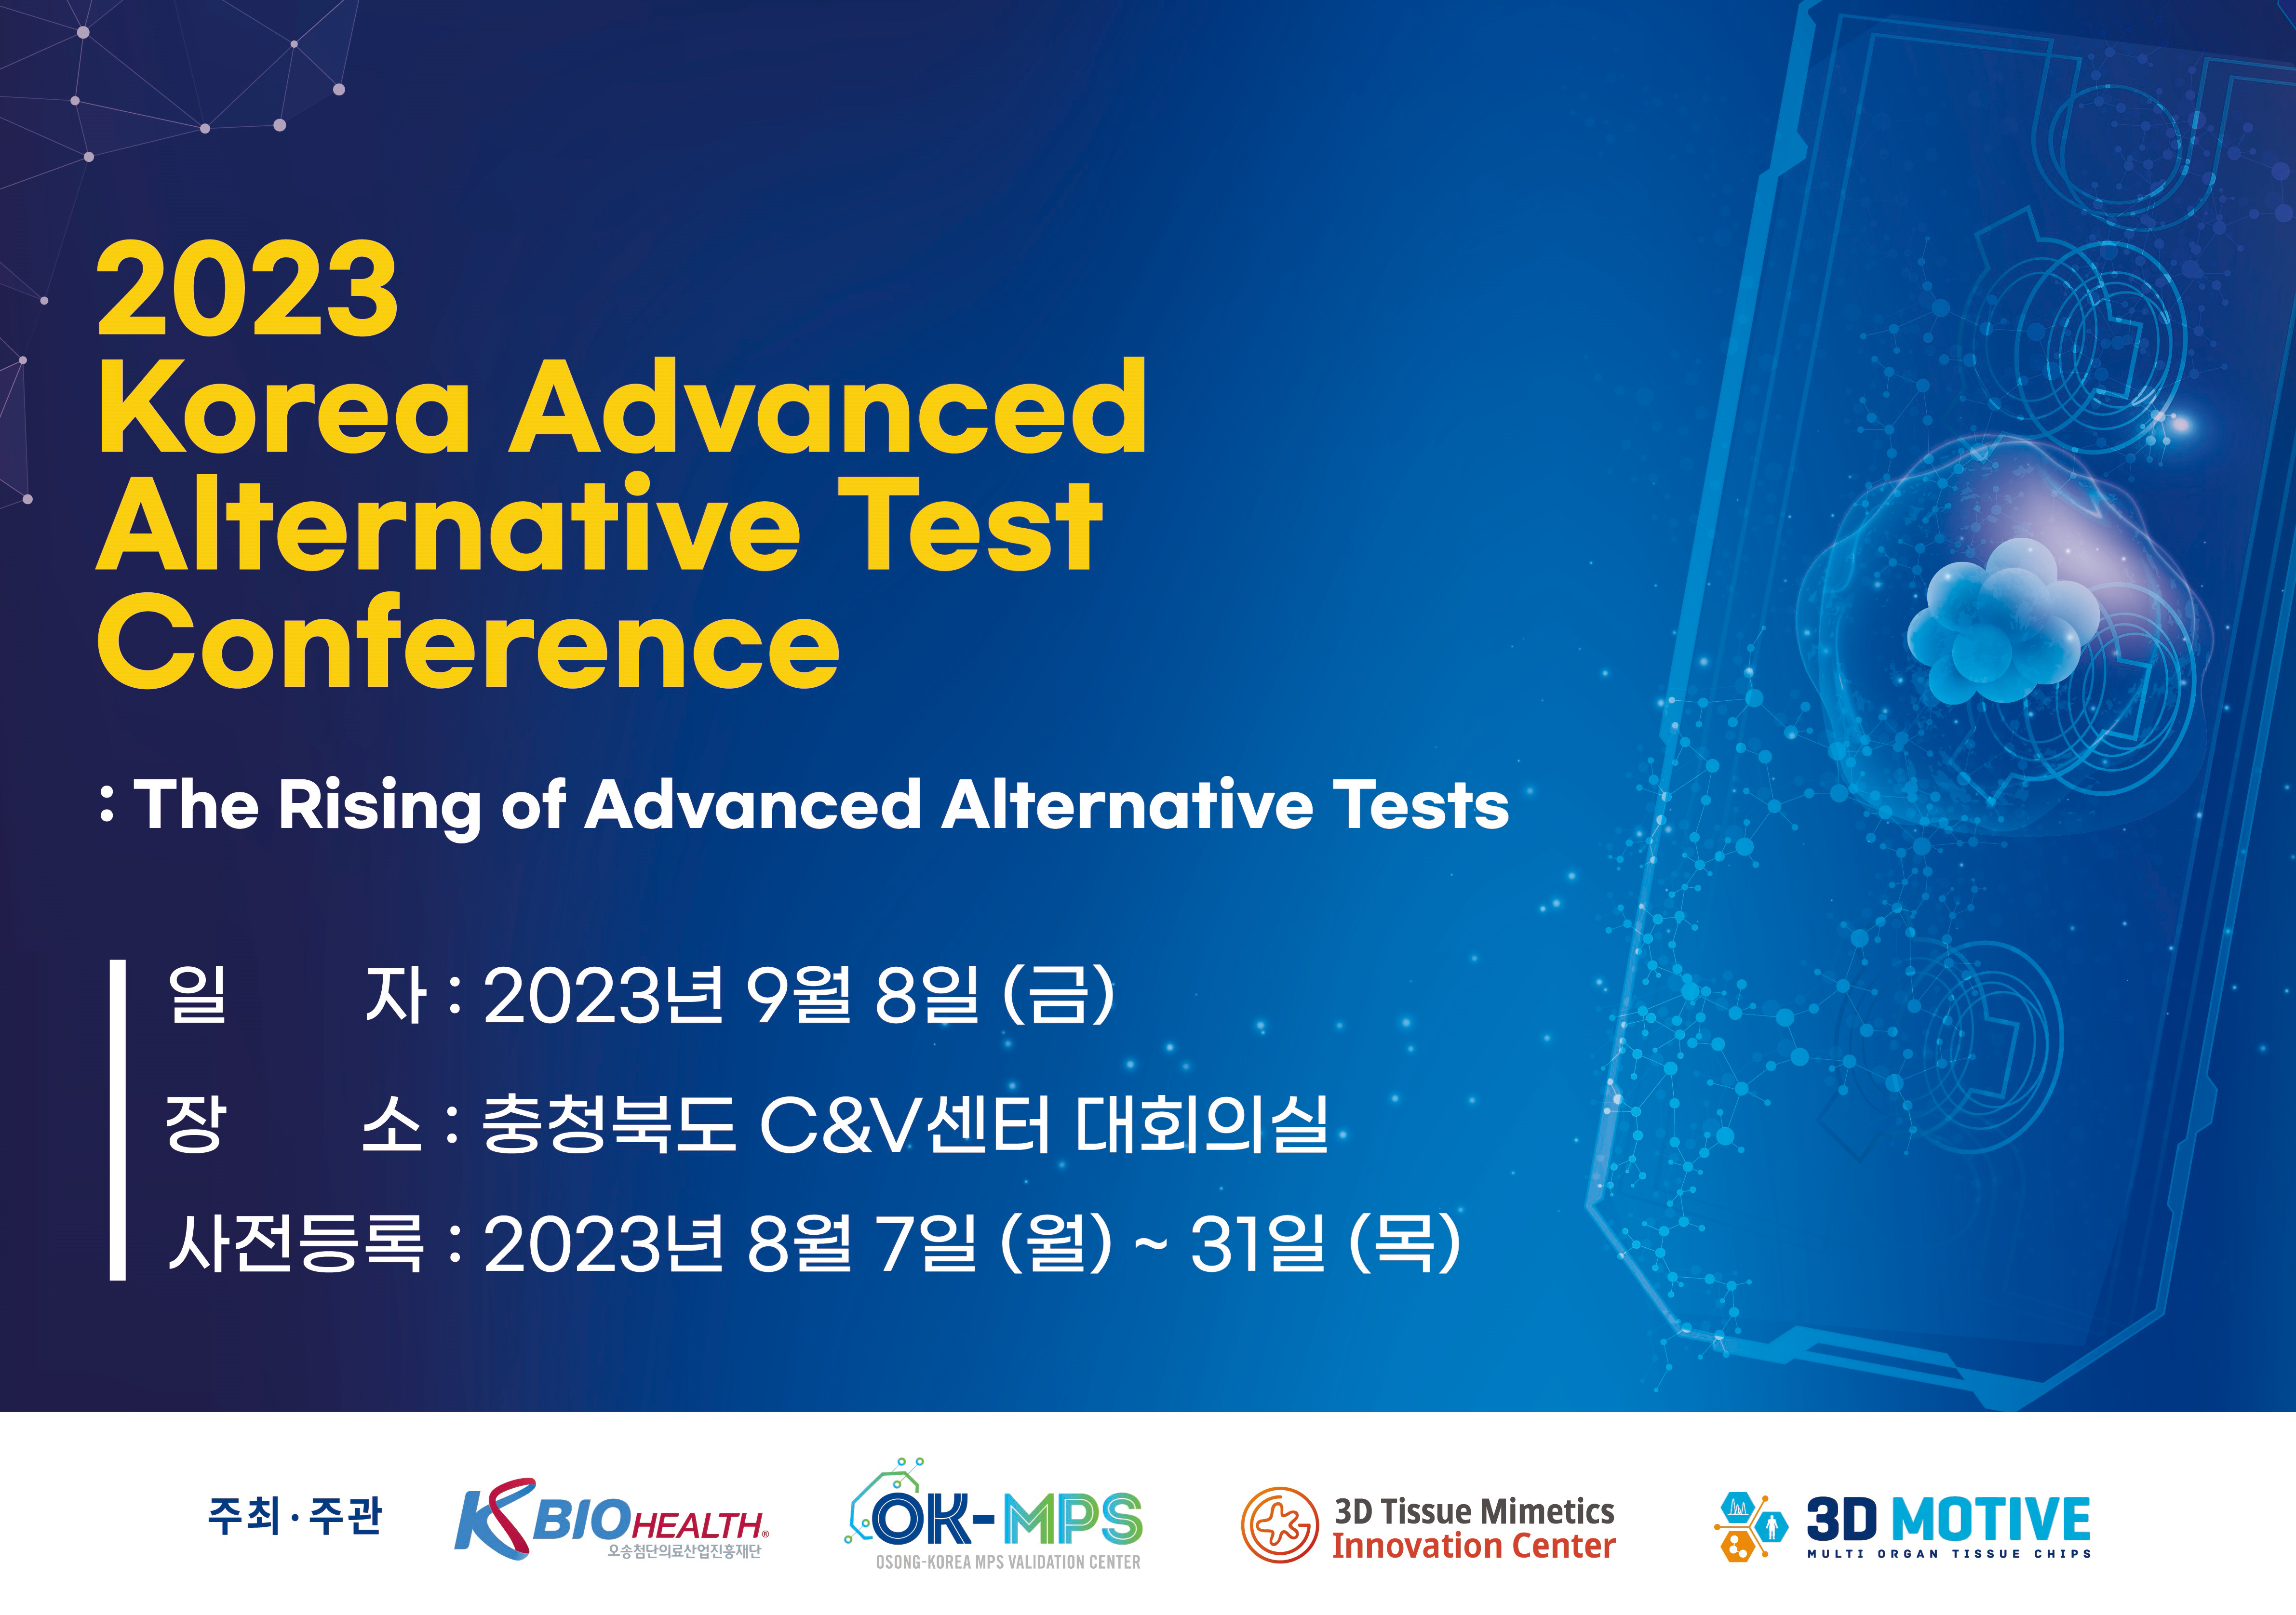 2023 Korea Advanced Alternative Test Conference : The Rising of Advanced Alternative Tests / 일자 : 2023년 9월 8일 (금) / 장소 : 충청북도 C&V센터 대회의실 / 사전등록 : 2023년 8월 7일 (월) ~ 31일 (목) / 주최·주관 : KBIOHEALTH, OK-MPS, 3D Tissue Mimetics Innovation Center, 3D MOTIVE